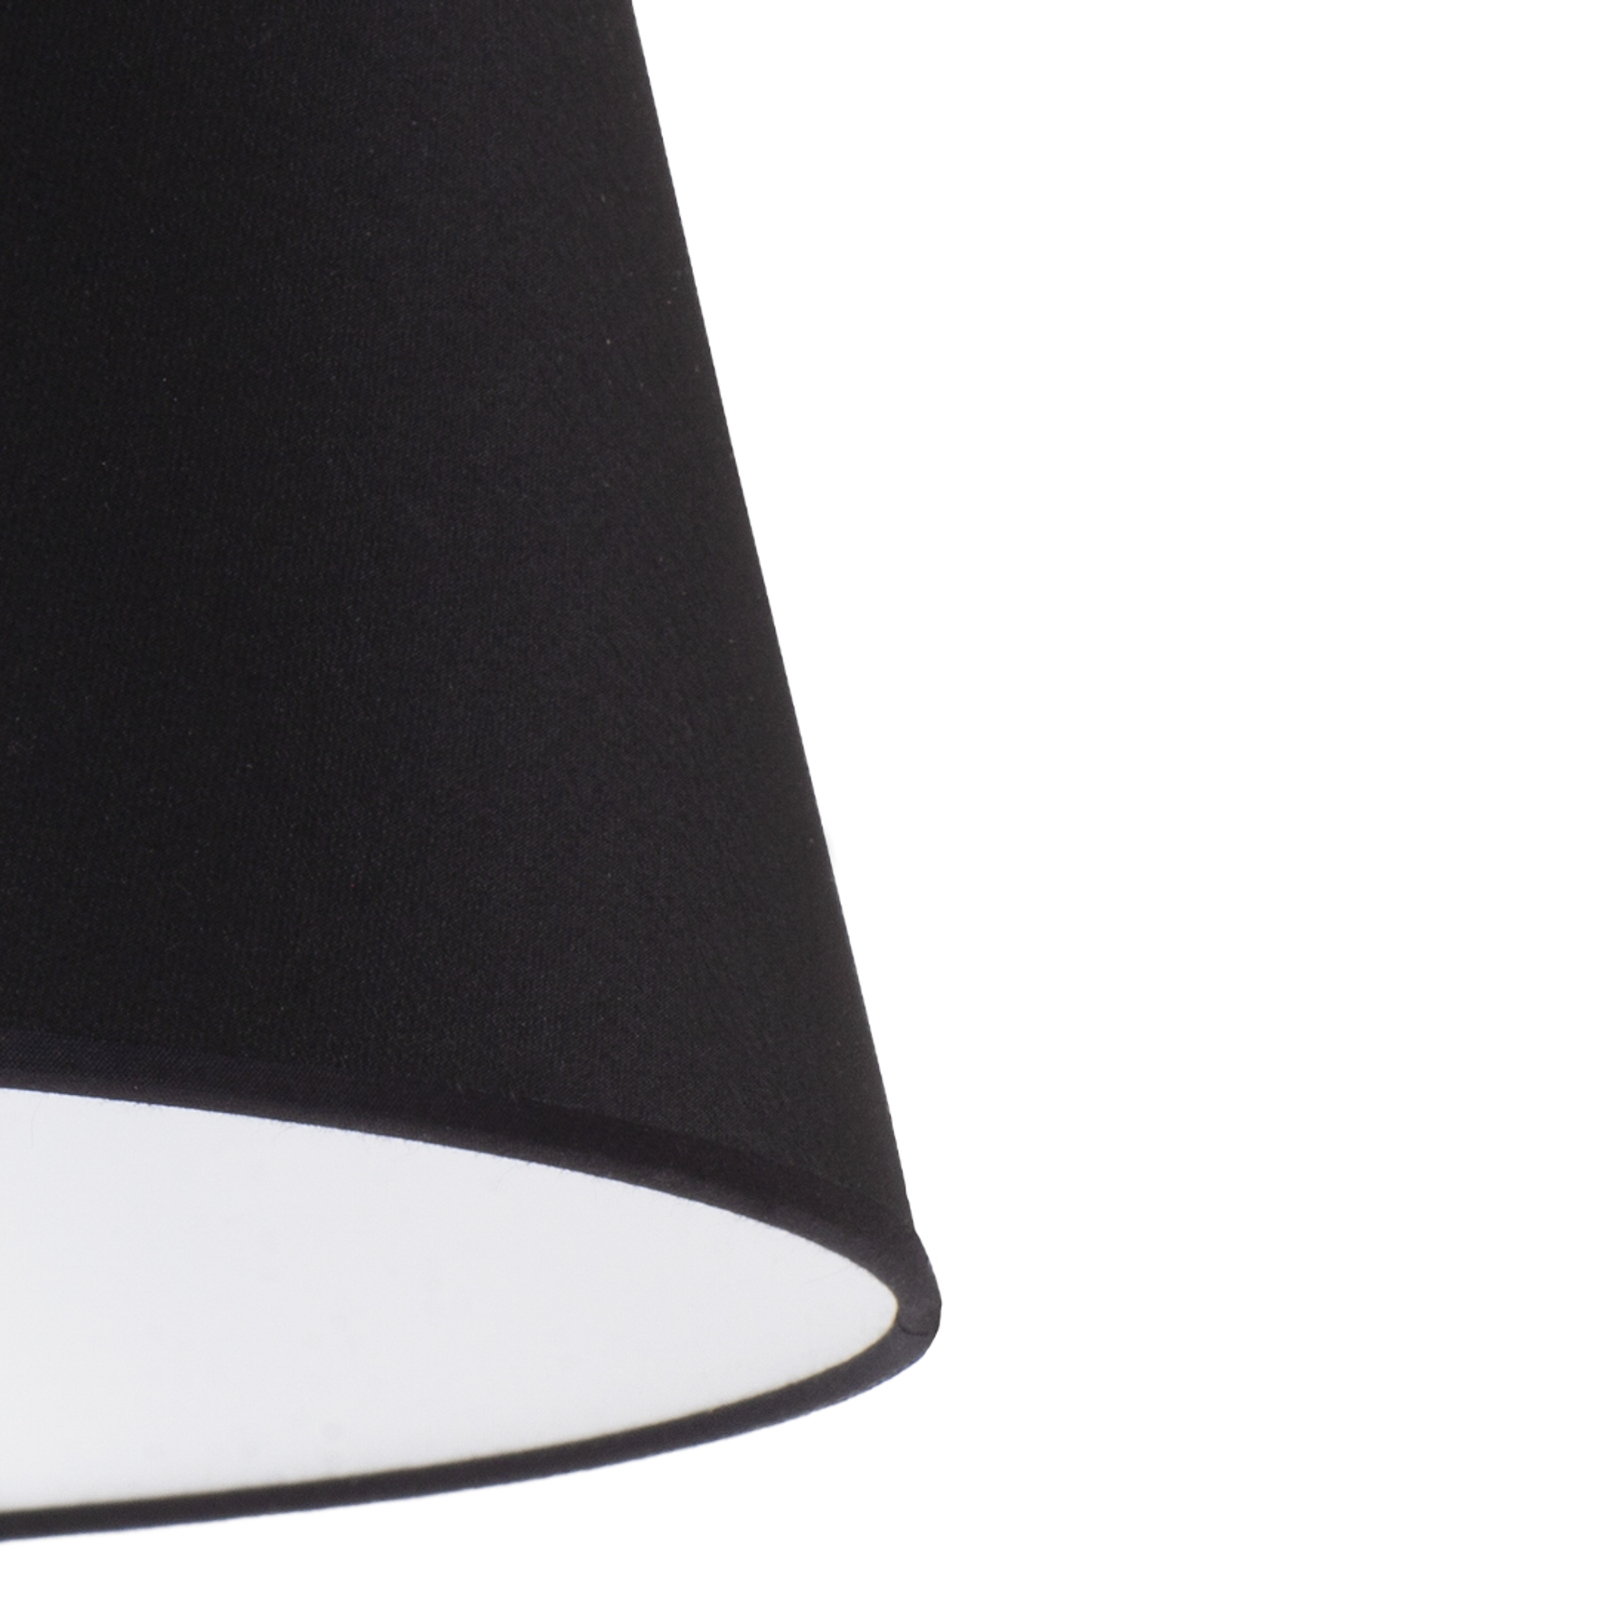 Lampskärm Cone höjd 25,5 cm, chintz svart